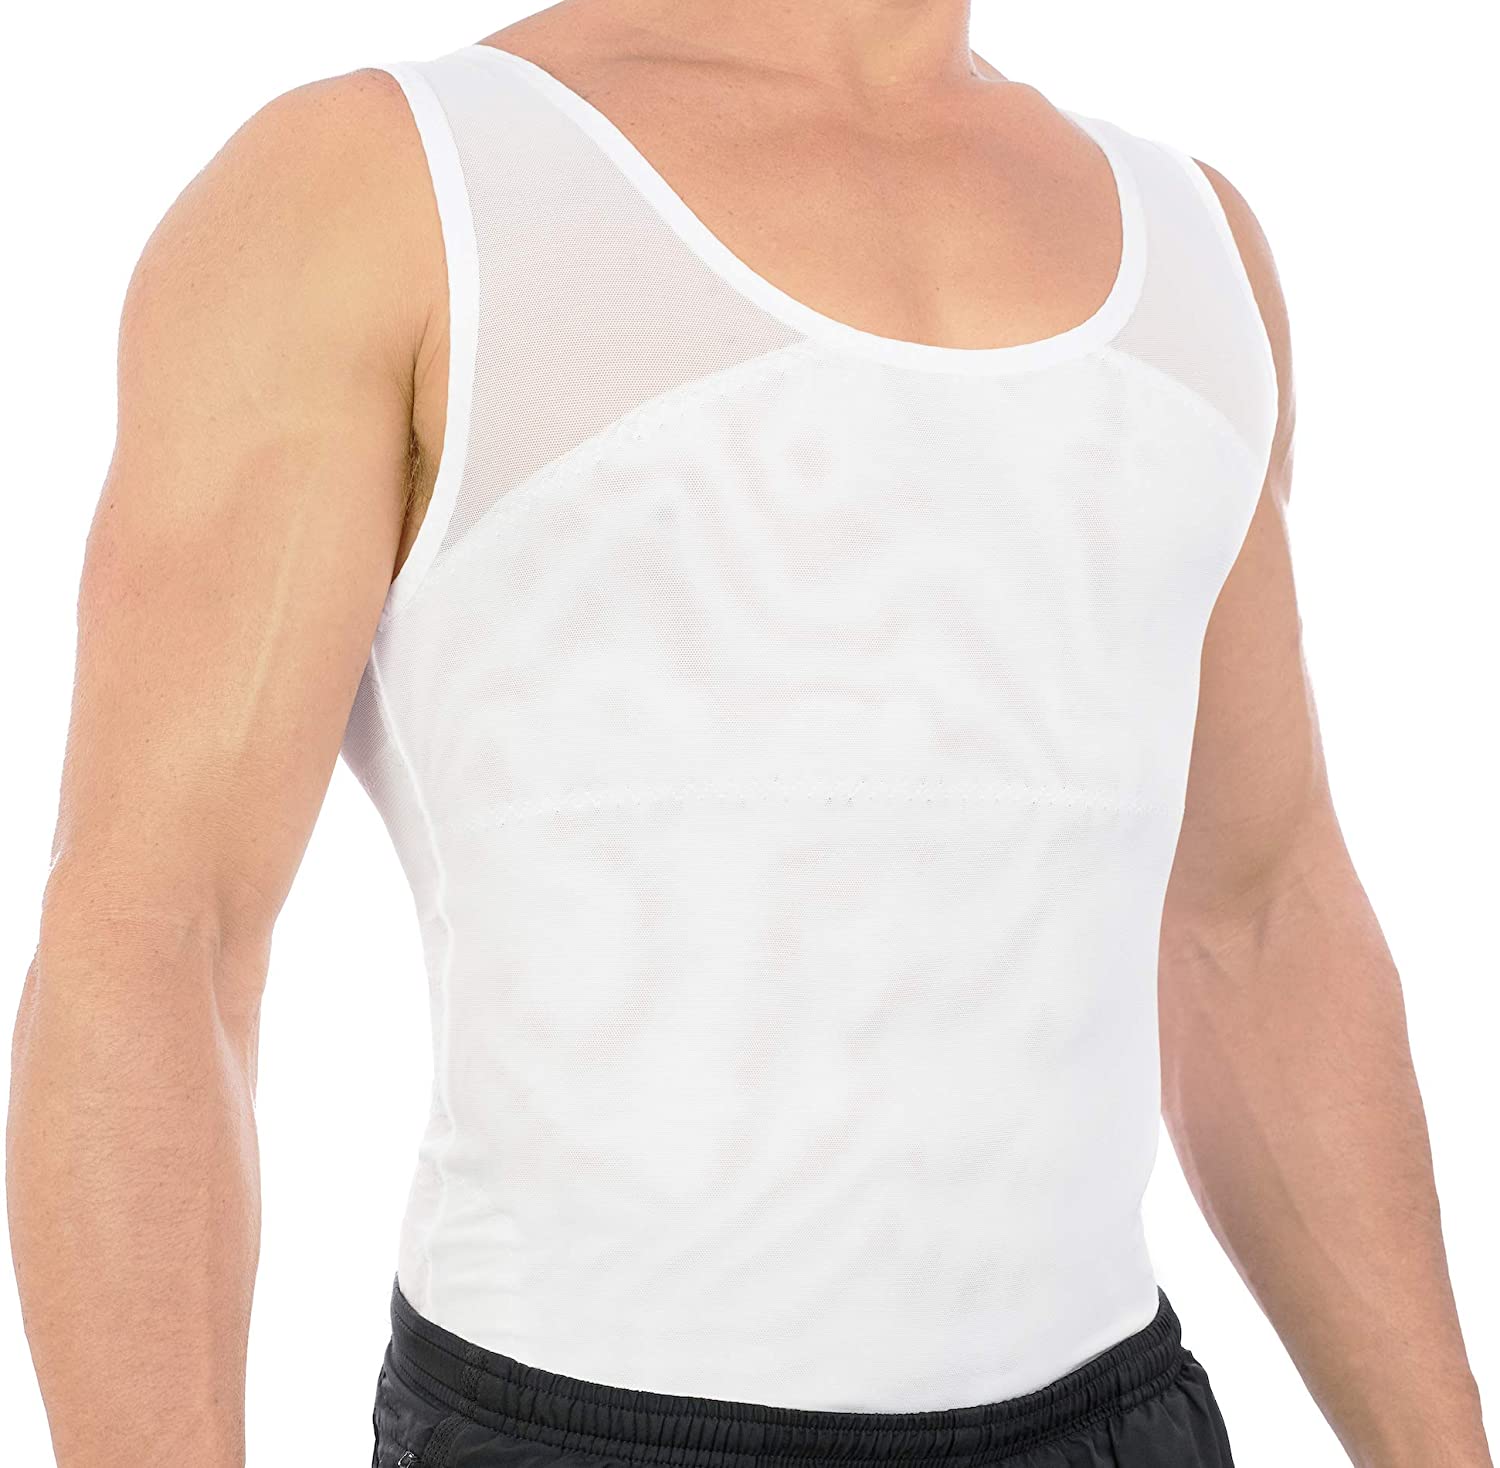 Esteem Apparel Original Men's Chest Compression Shirt to Hide ...